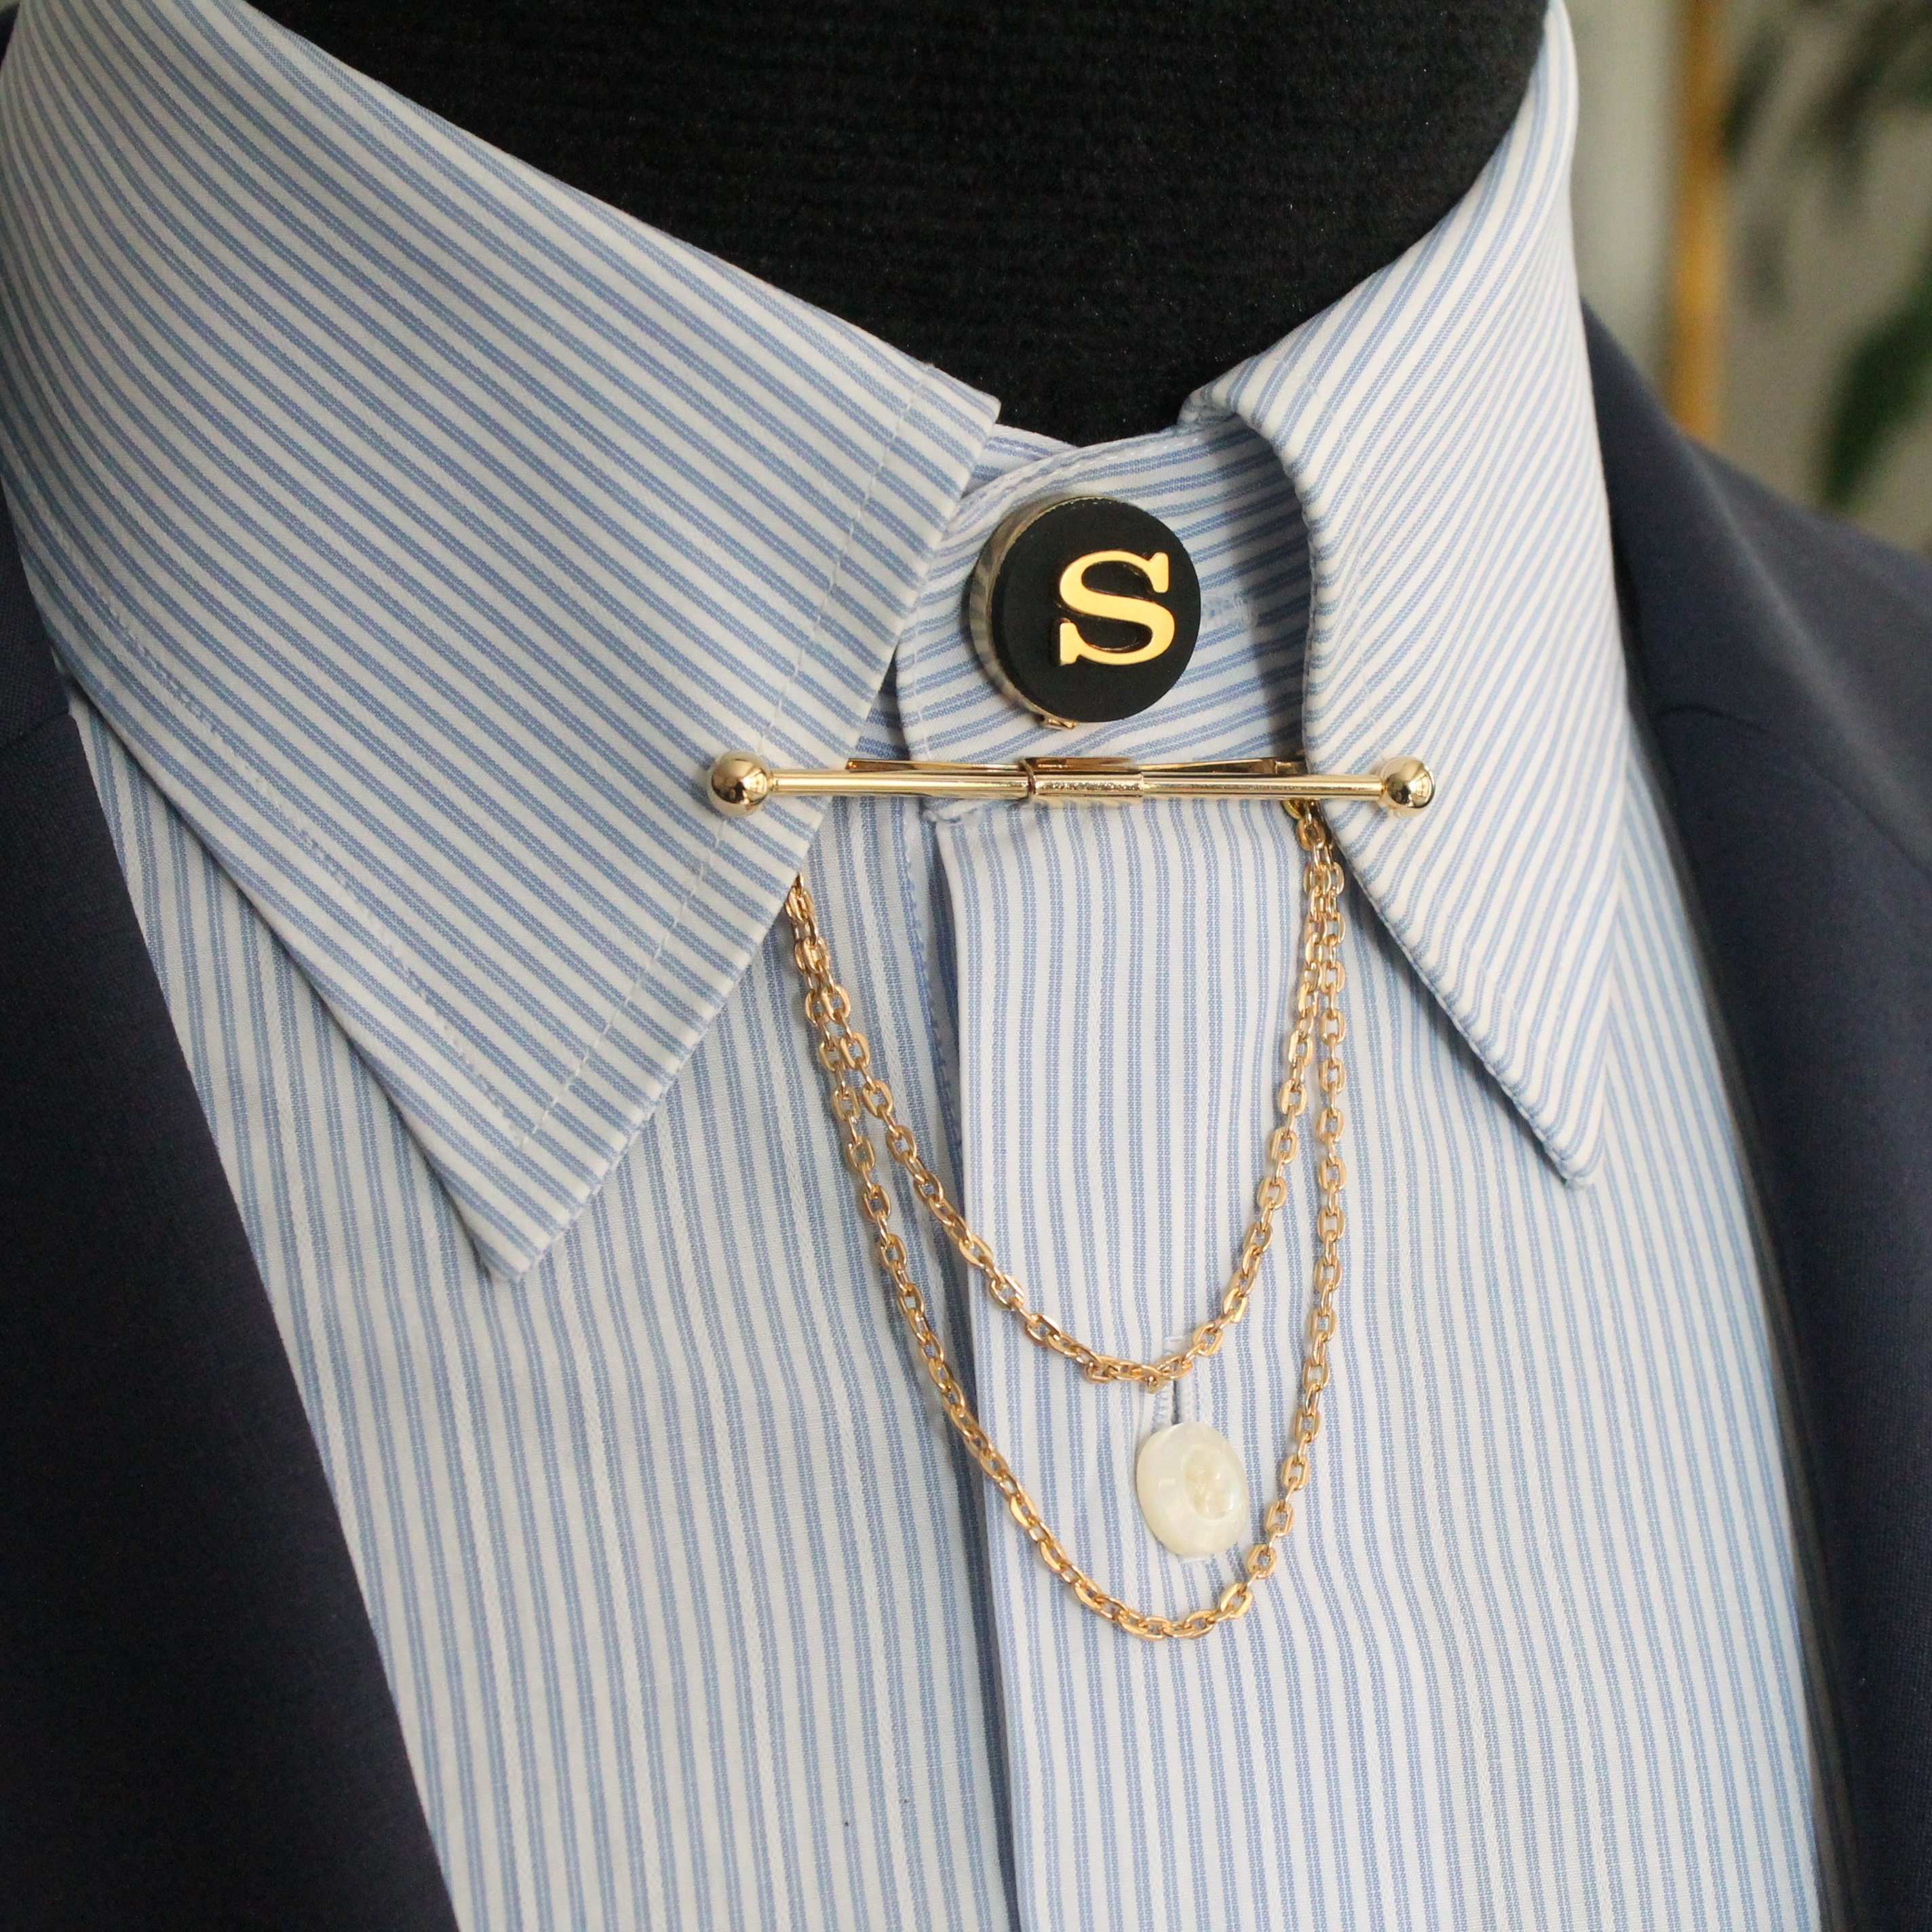 Customized Gold Colour Button Cover Shirt Collar Clip | Etsy